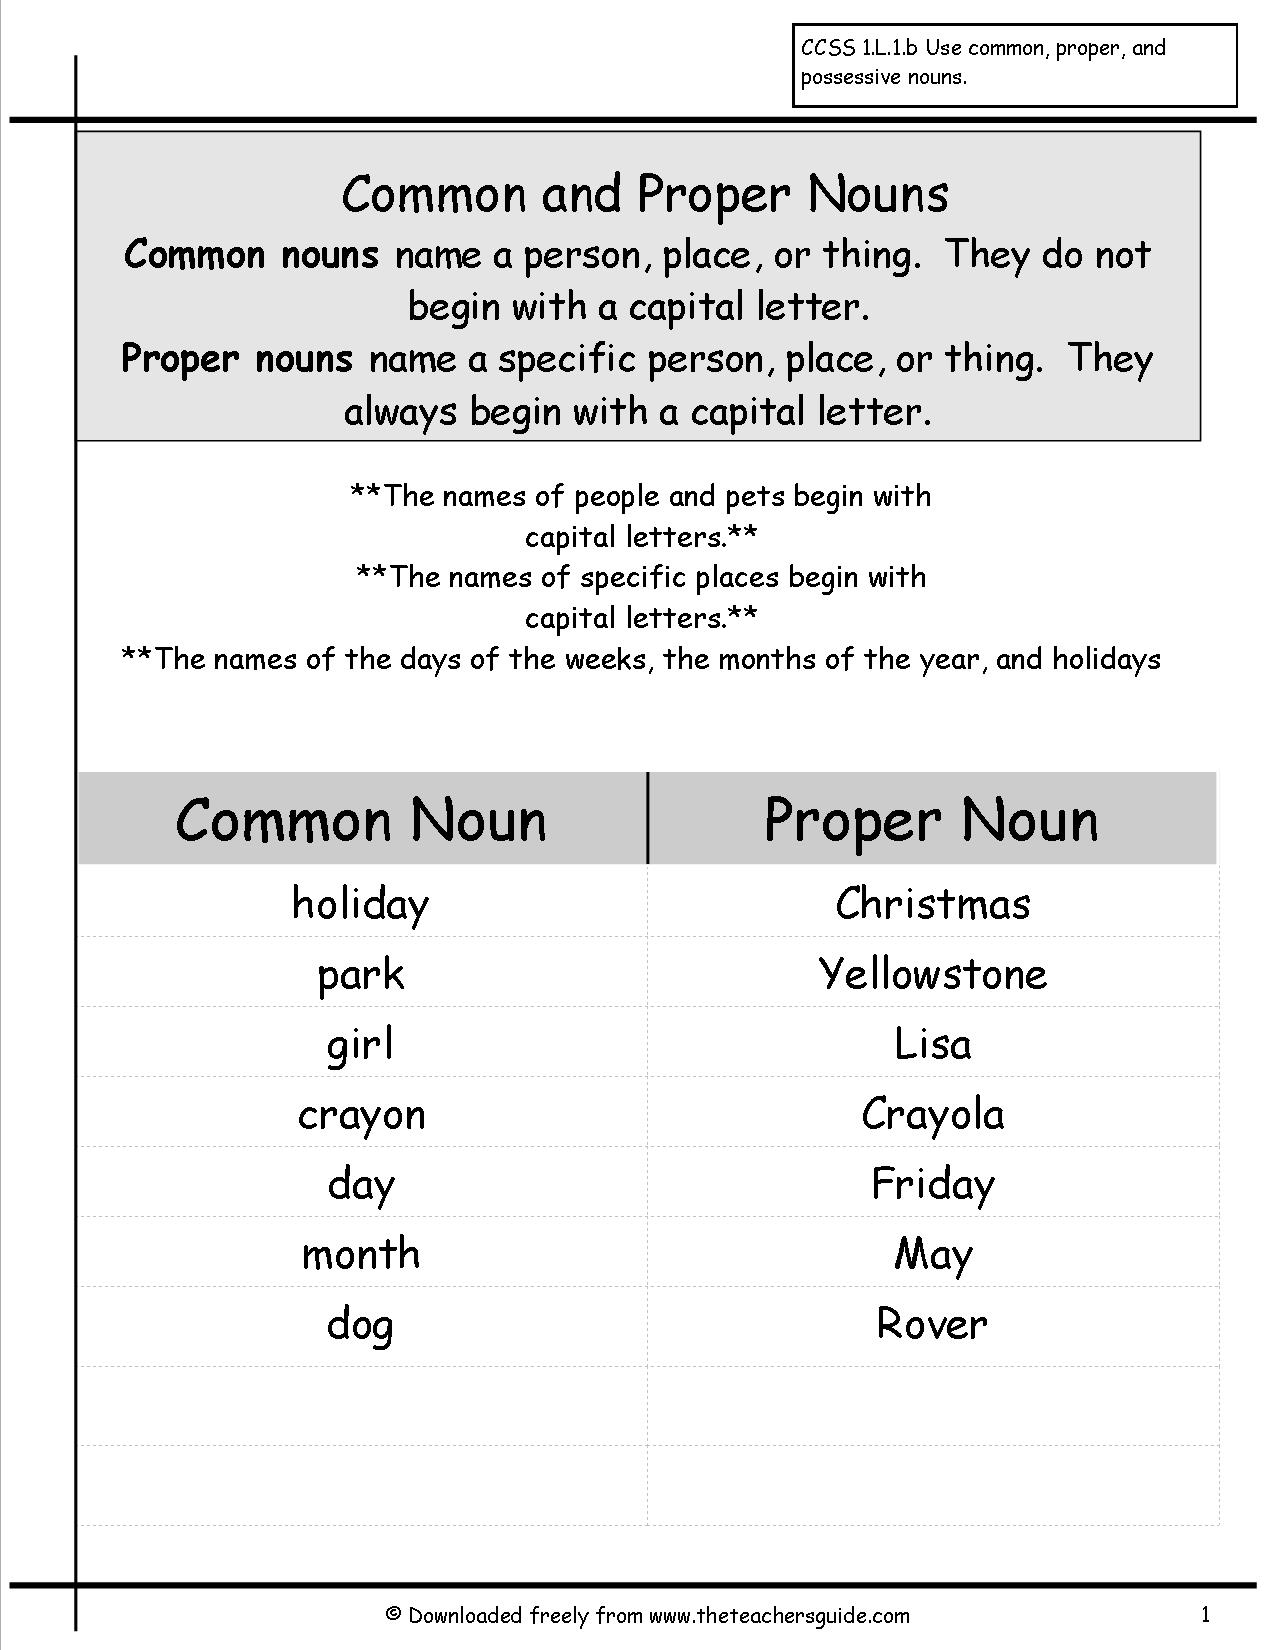 Pronoun And Common Noun Worksheet